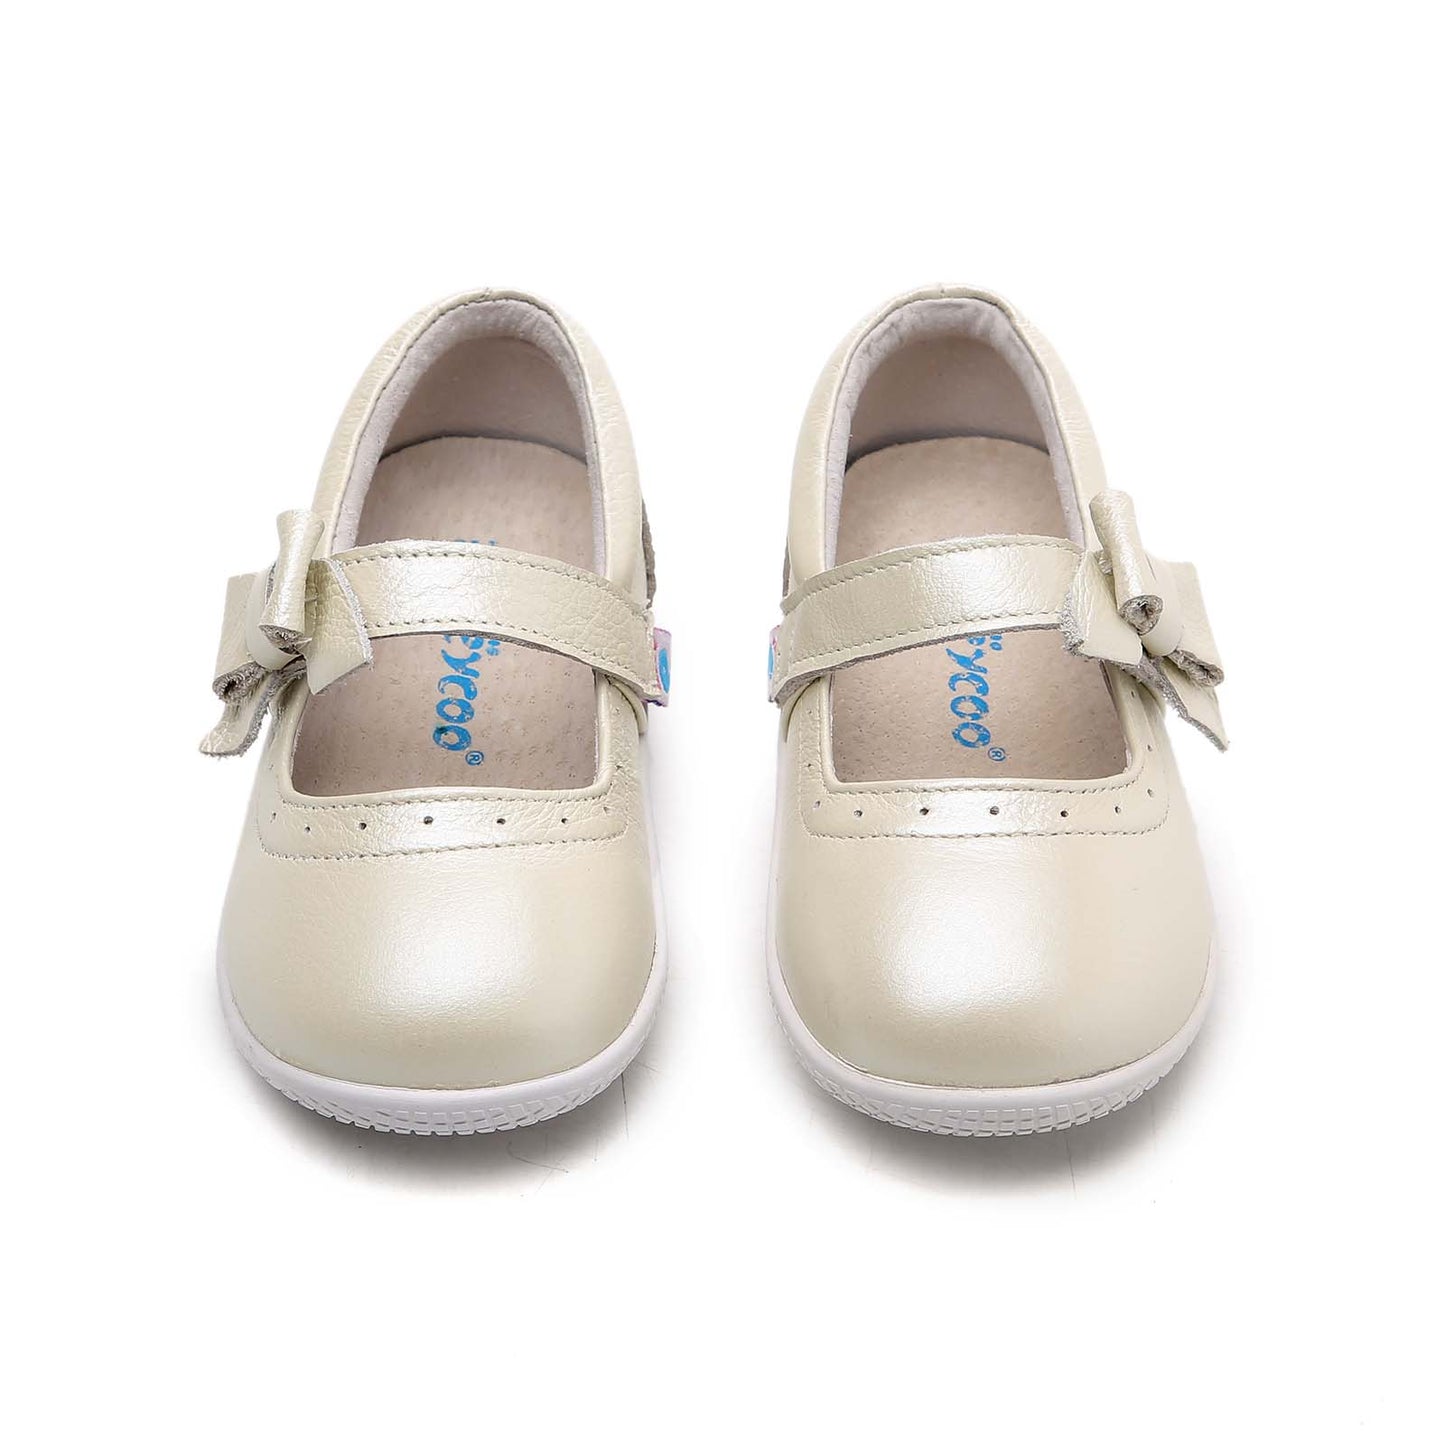 Freycoo - Cream Janelle Flexi-Sole Toddler Shoes